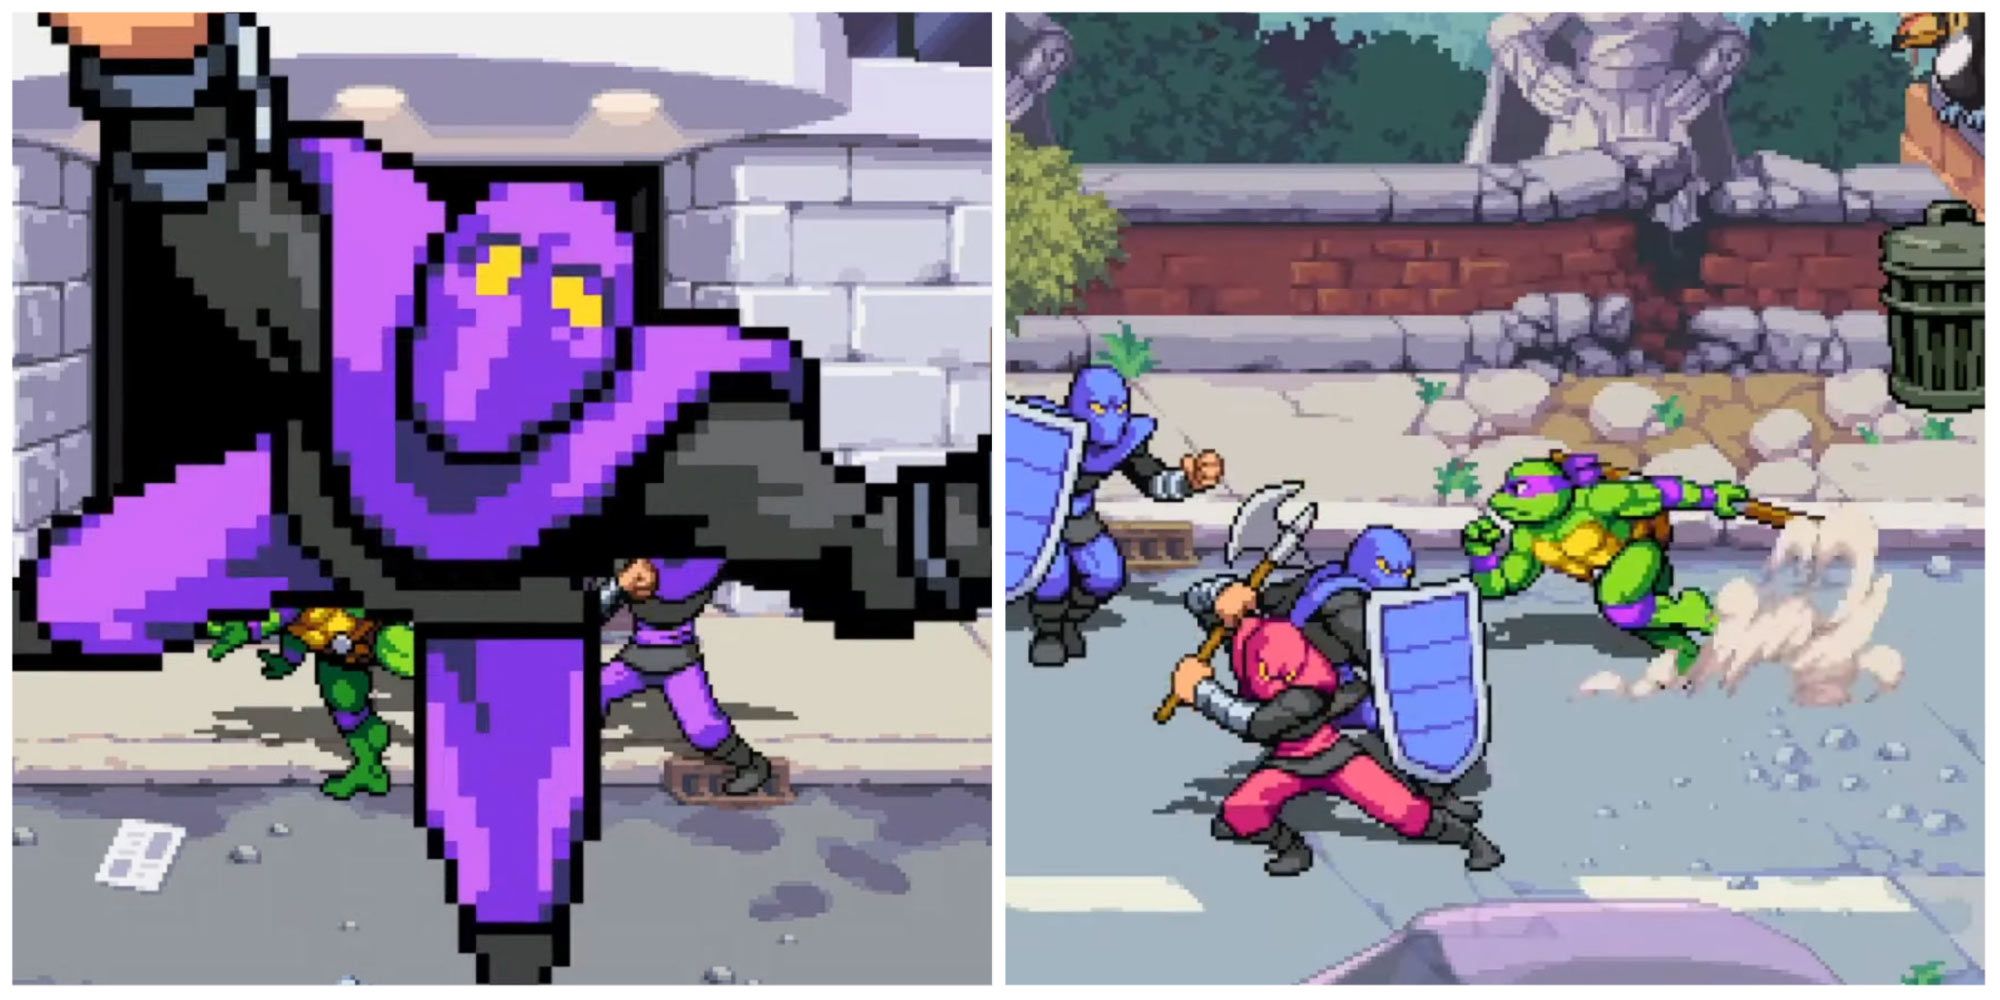 A collage showing gameplay in Teenage Mutant Ninja Turtles: Shredder's Revenge